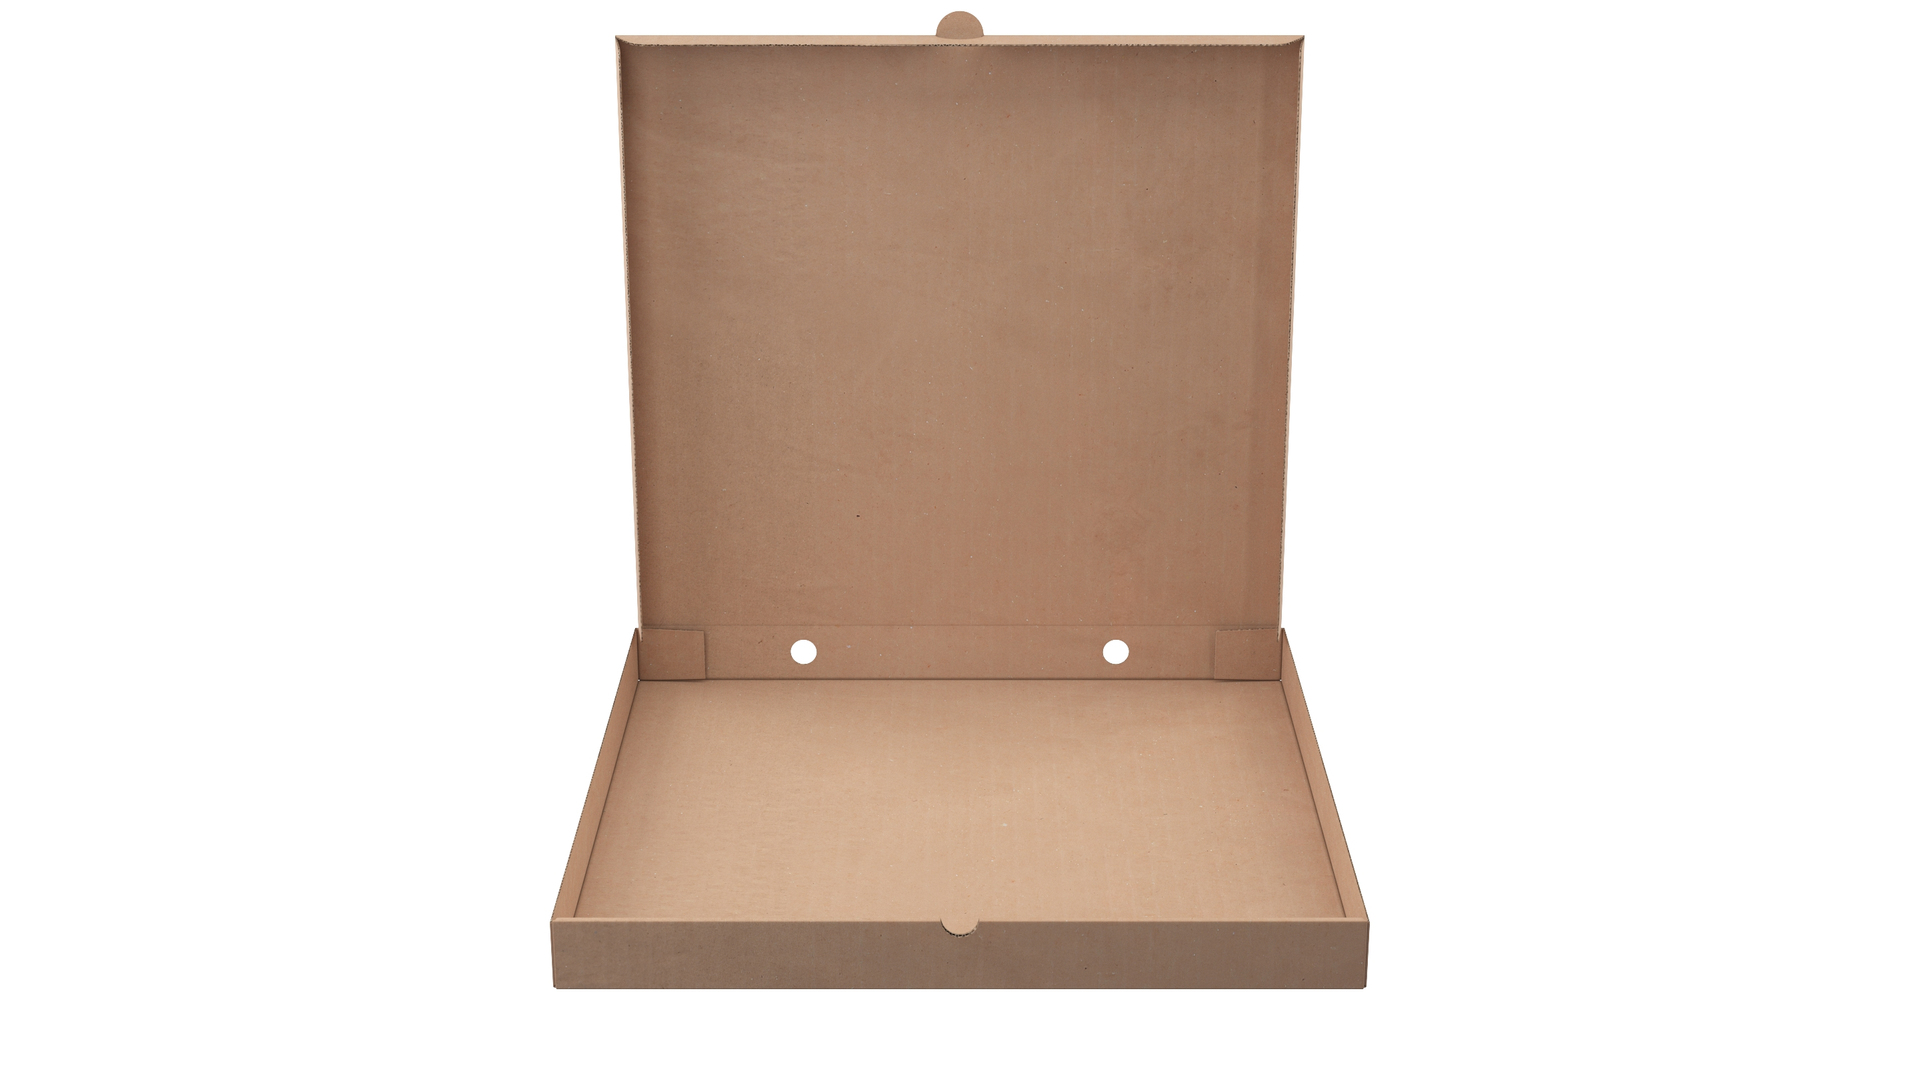 Pizza Box Open 3D Model $29 - .max .unitypackage .upk - Free3D